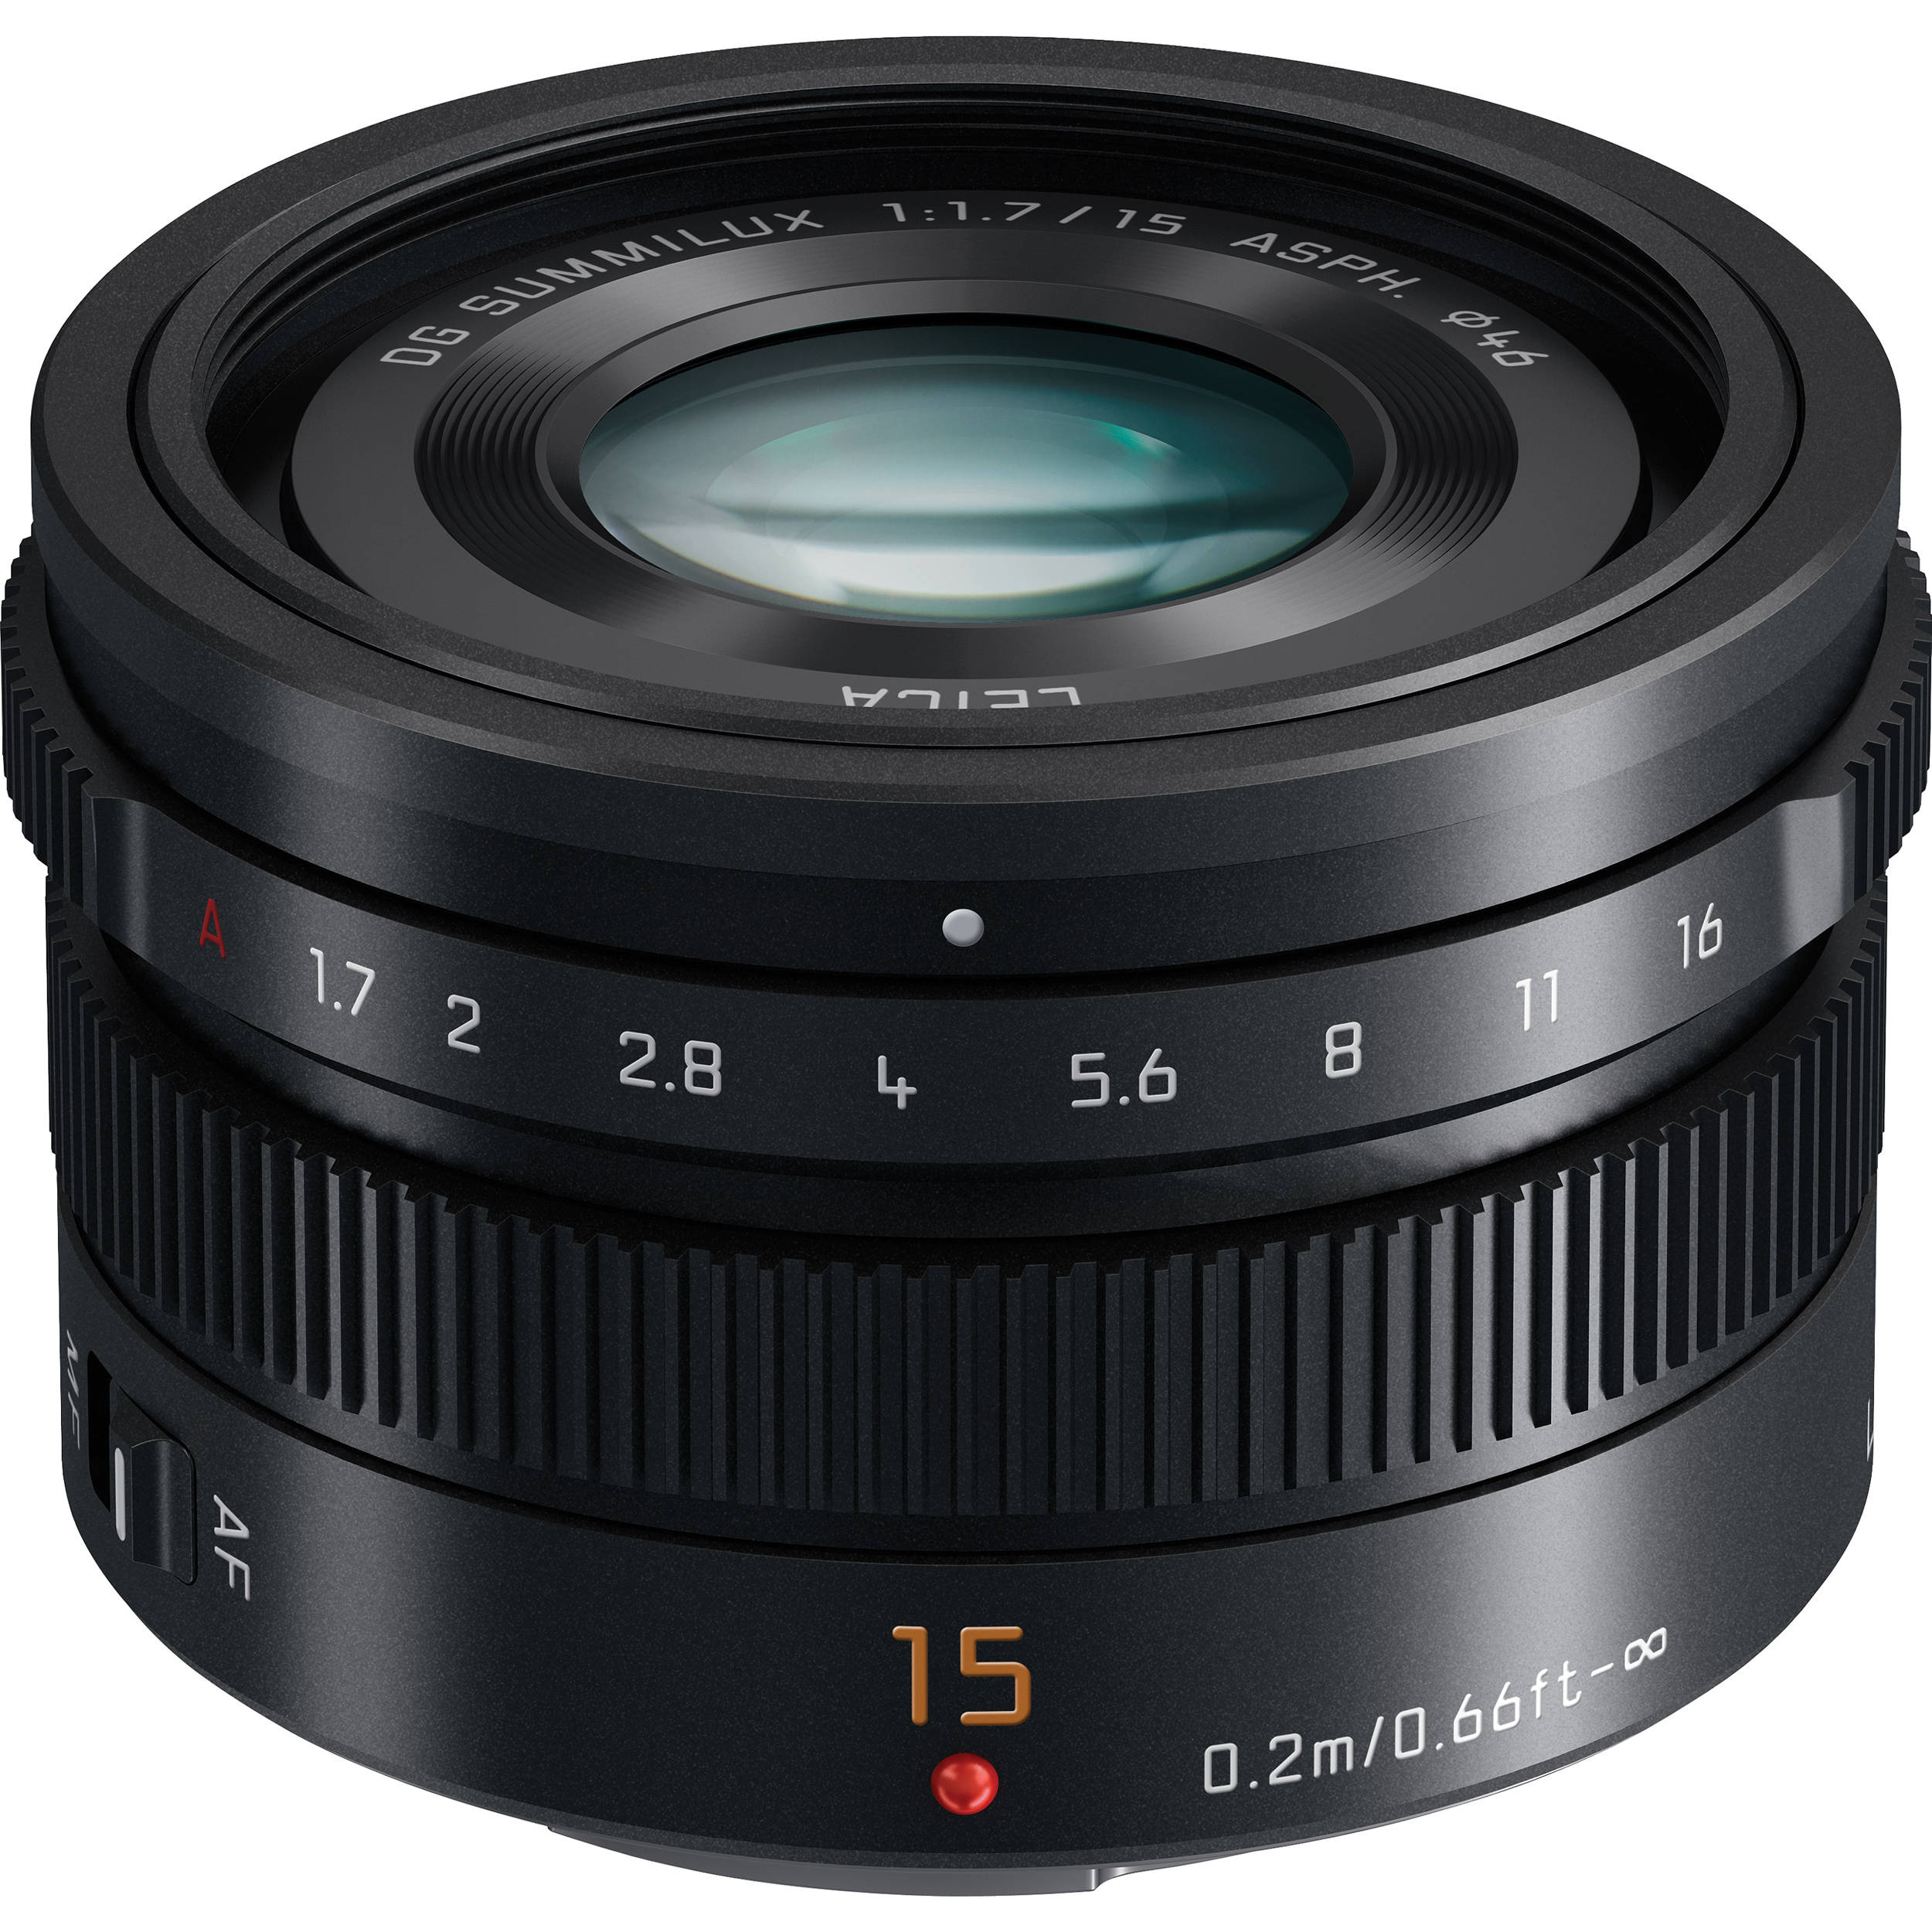 Panasonic LUMIX G Leica DG Summilux 15mm f/1.7 ASPH. Lens (Black)